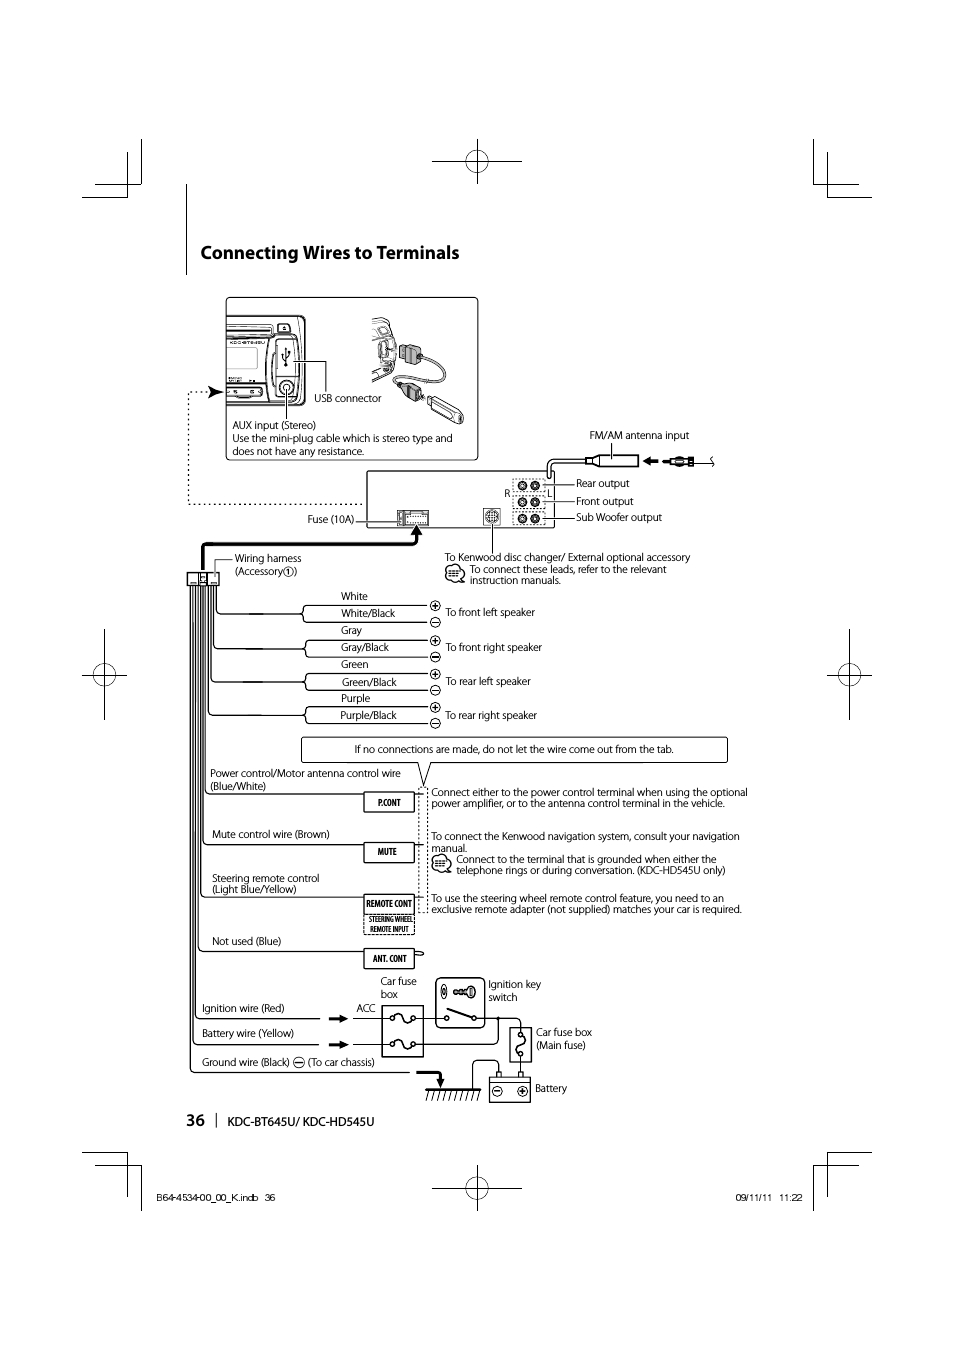 Connecting Wires To Terminals | Kenwood Kdc-Hd545U User Manual - Kenwood Kdc Wiring Diagram